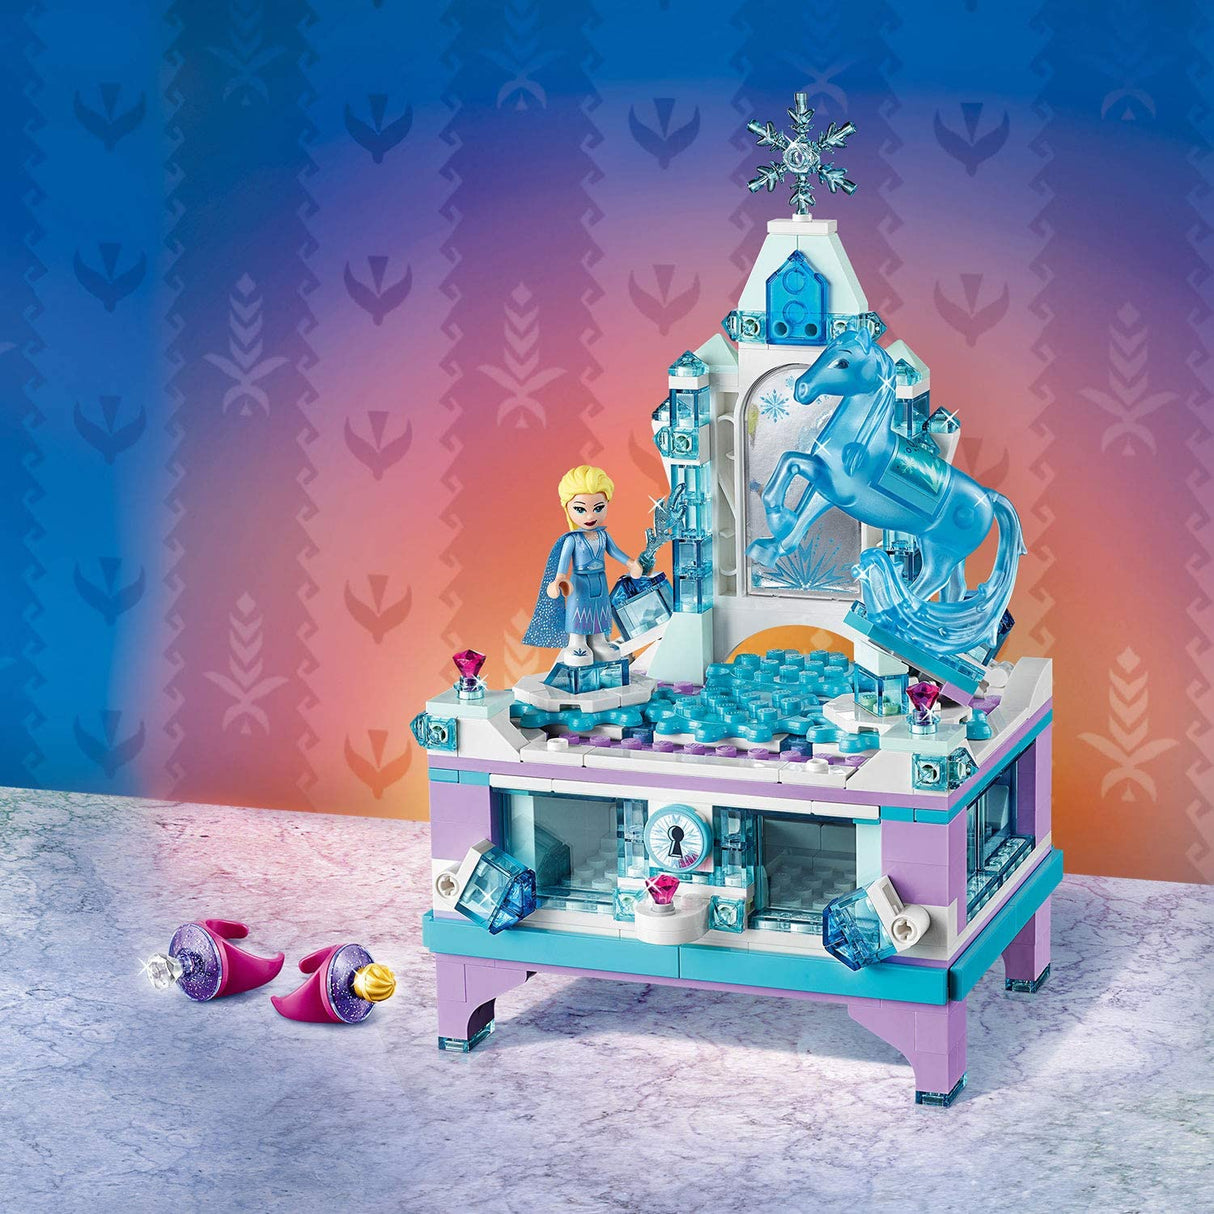 Lego 41168 Princess Disney Frozen Elsa caixa de joias